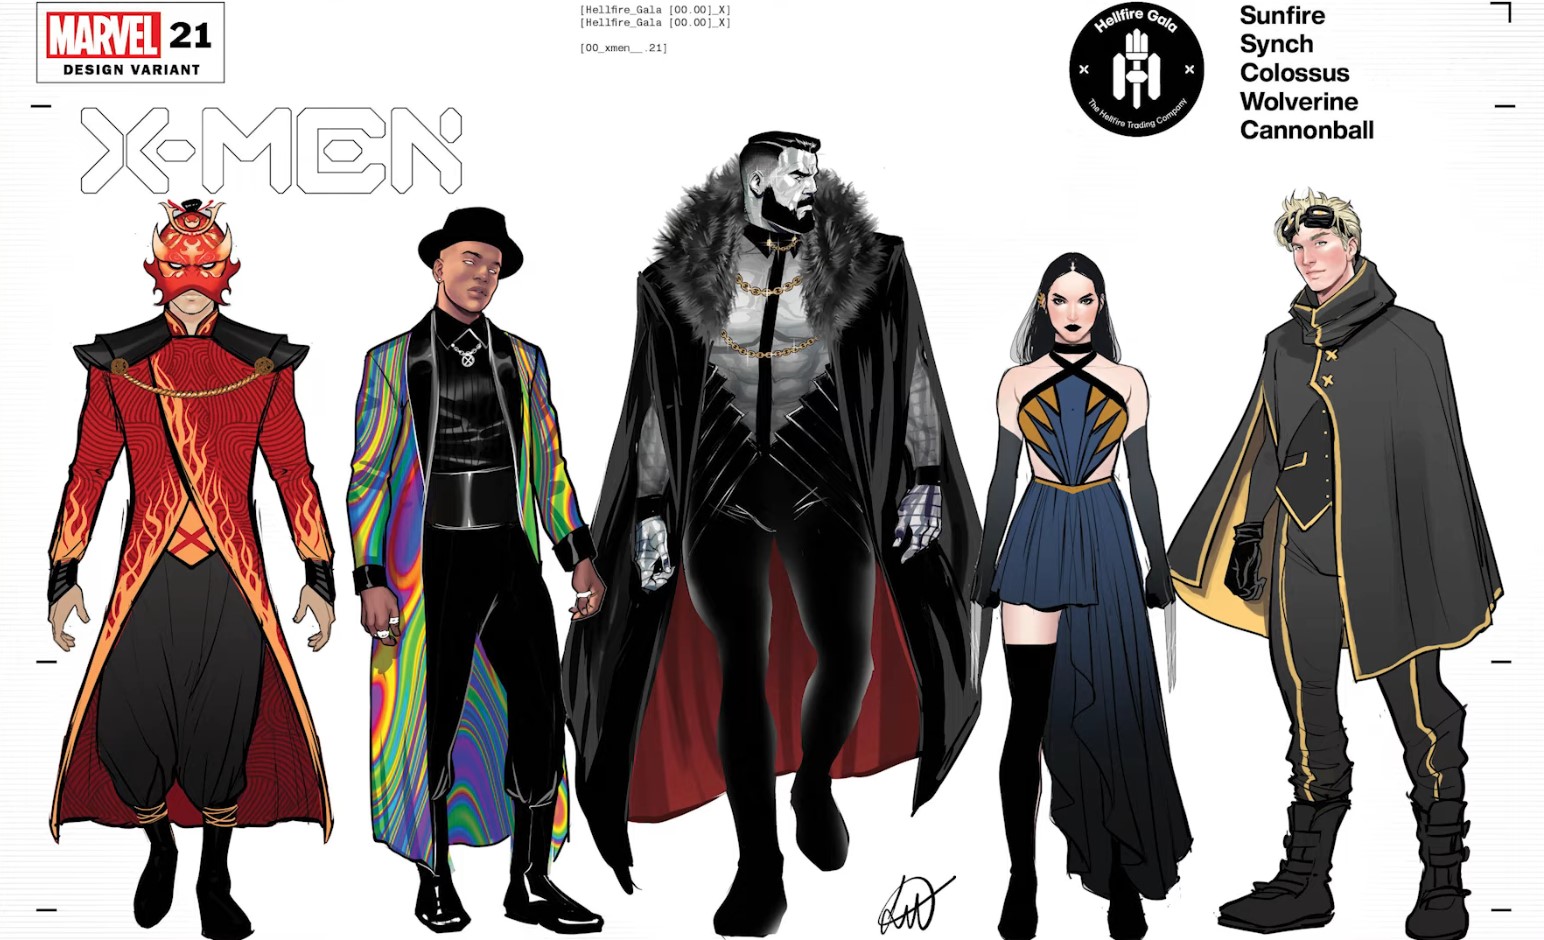 Hellfire gala outfits 2021 X-Men